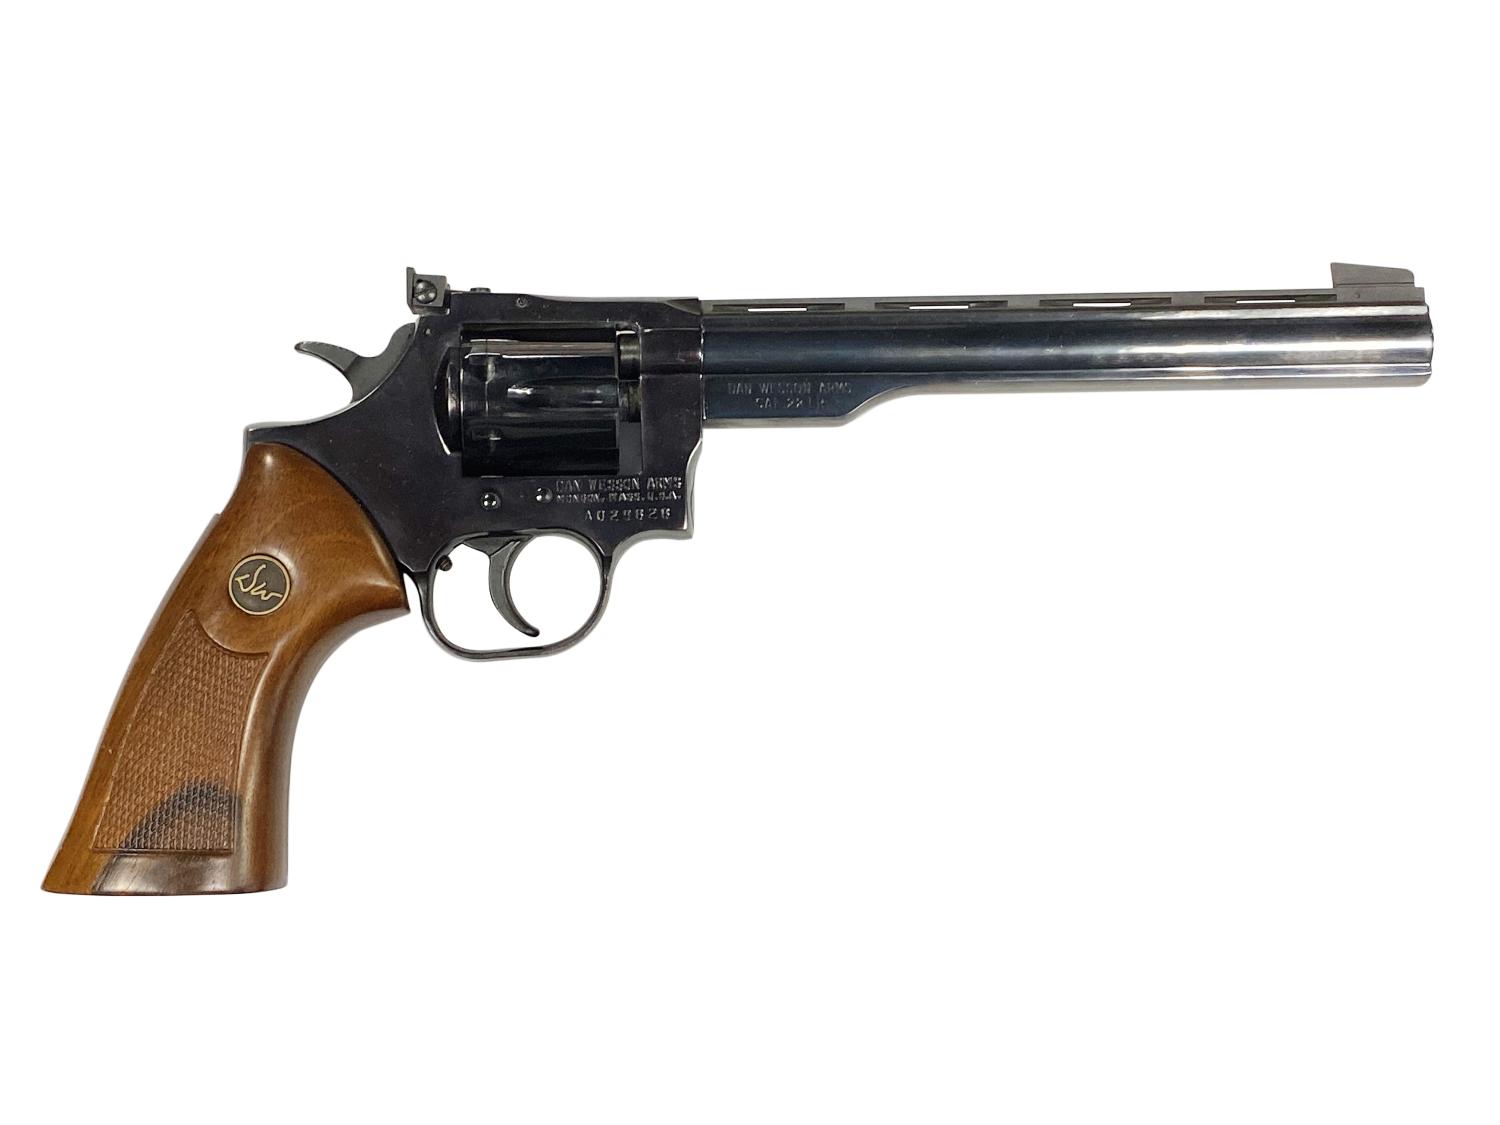  Dan Wesson 22lr Revolver Safe Queen